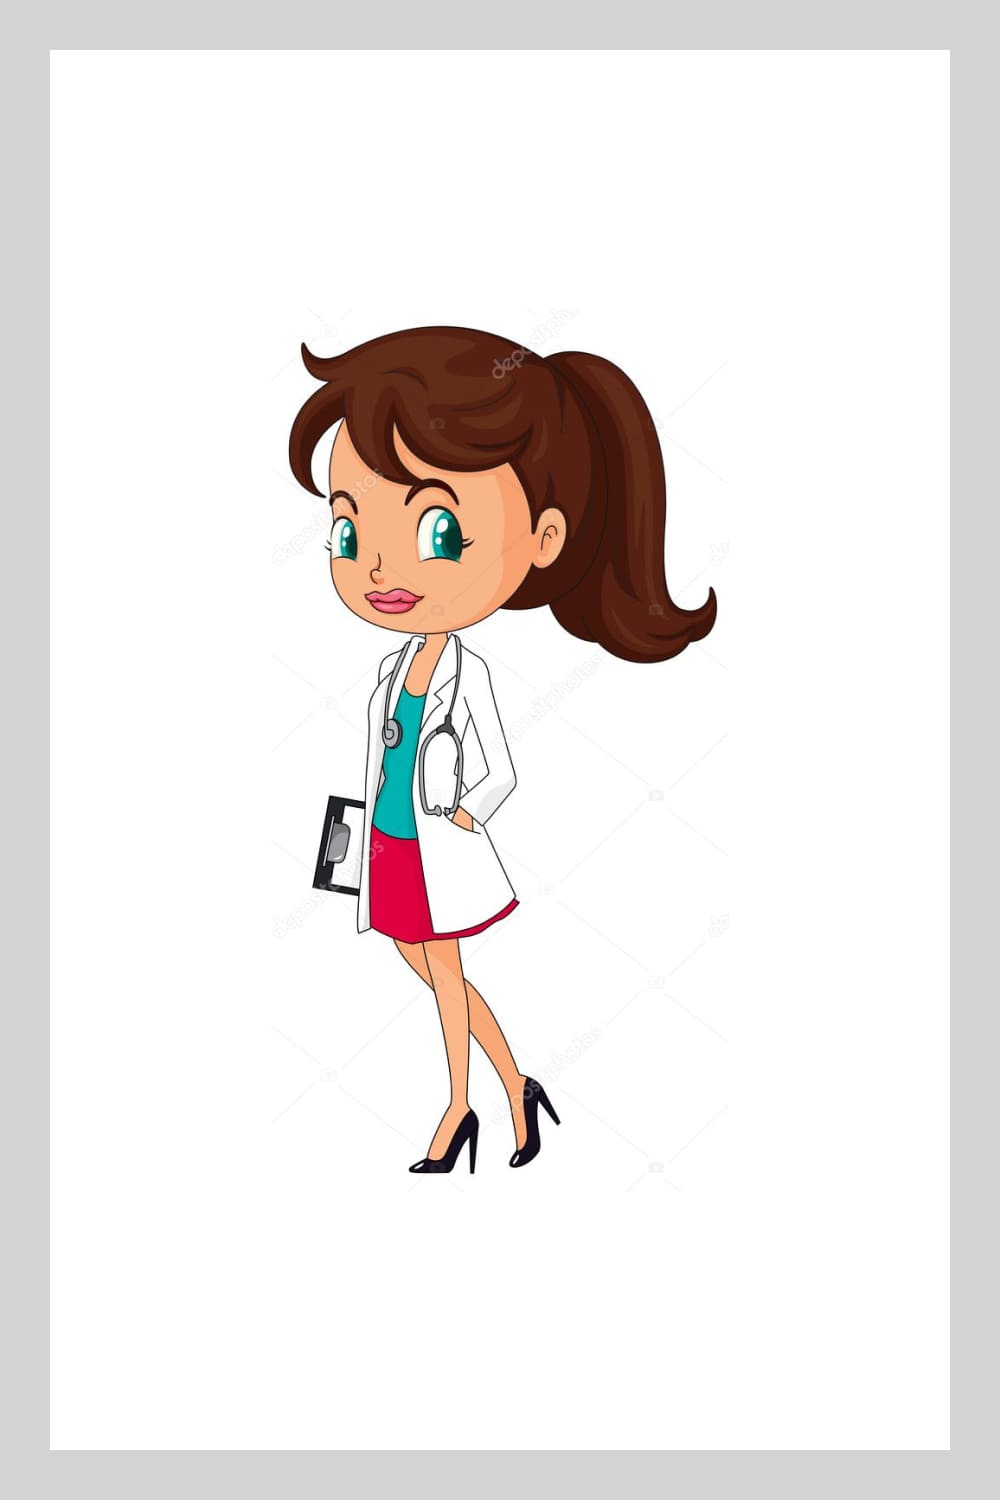 Cartoon young woman doctor.